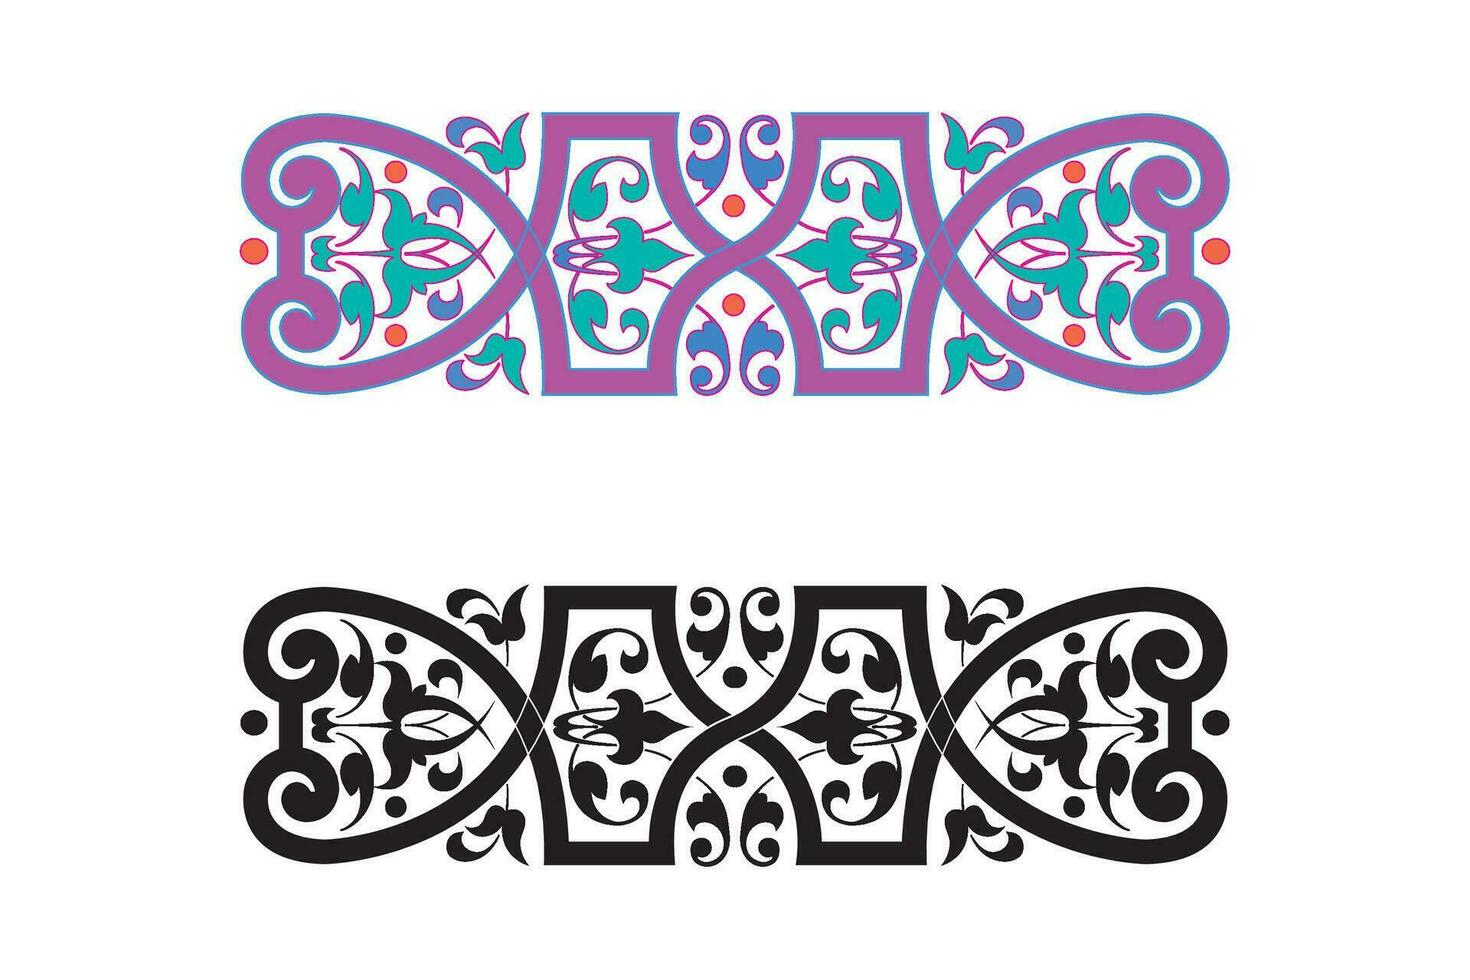 Vintage floral calligraphic floral vignette scroll corners ornamental design elements black set isolated vector